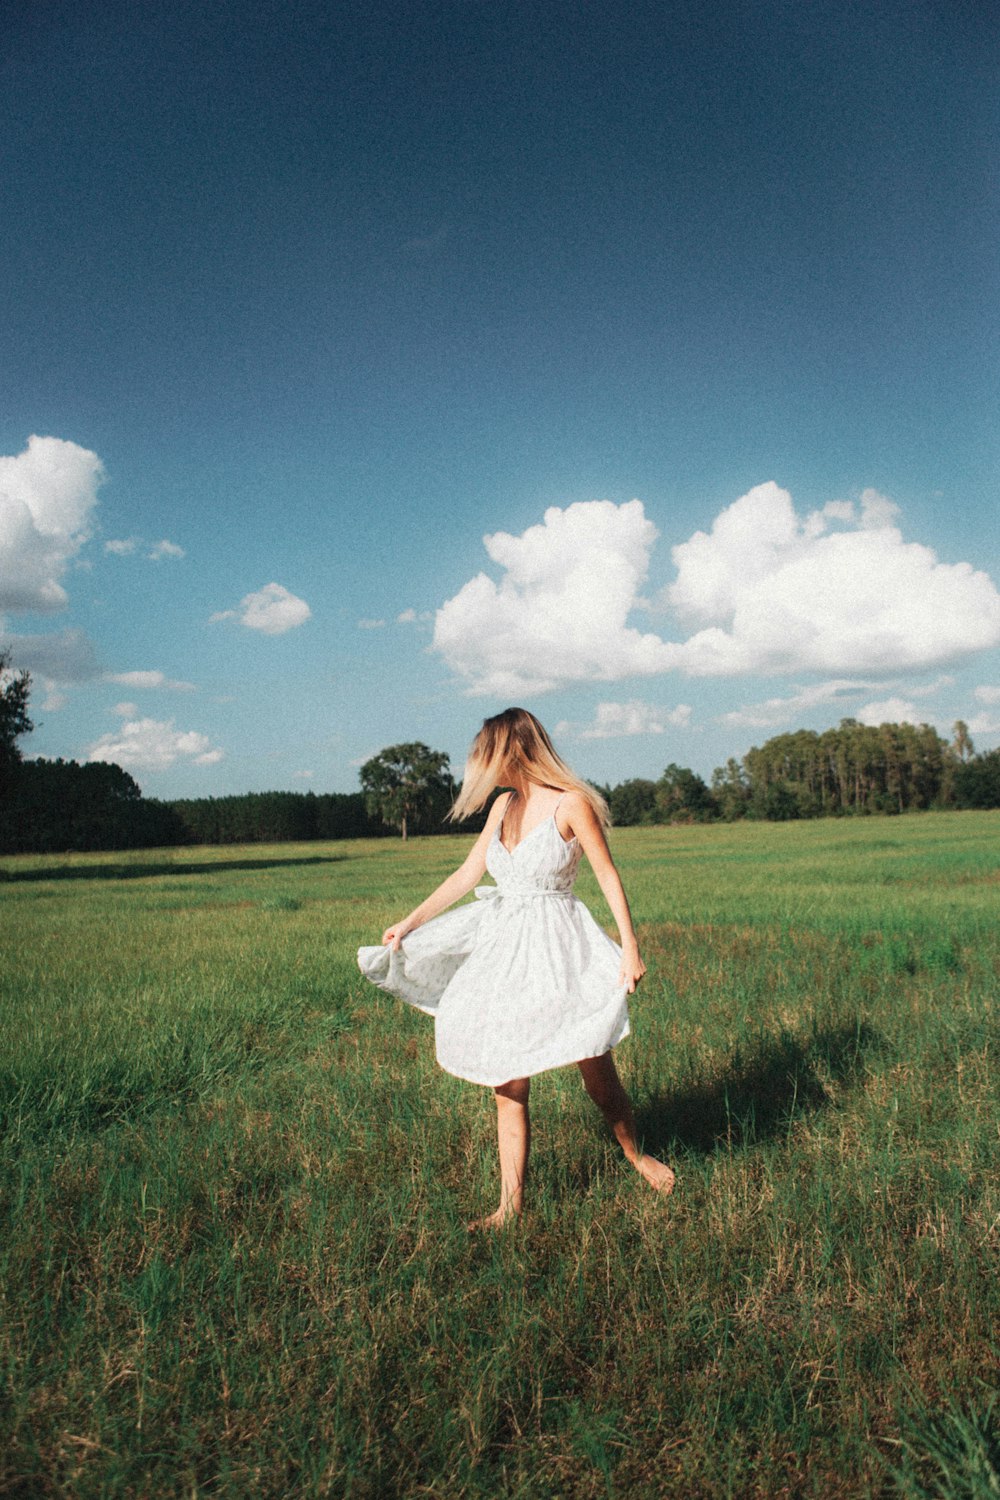 a person in a white dress walking in a field